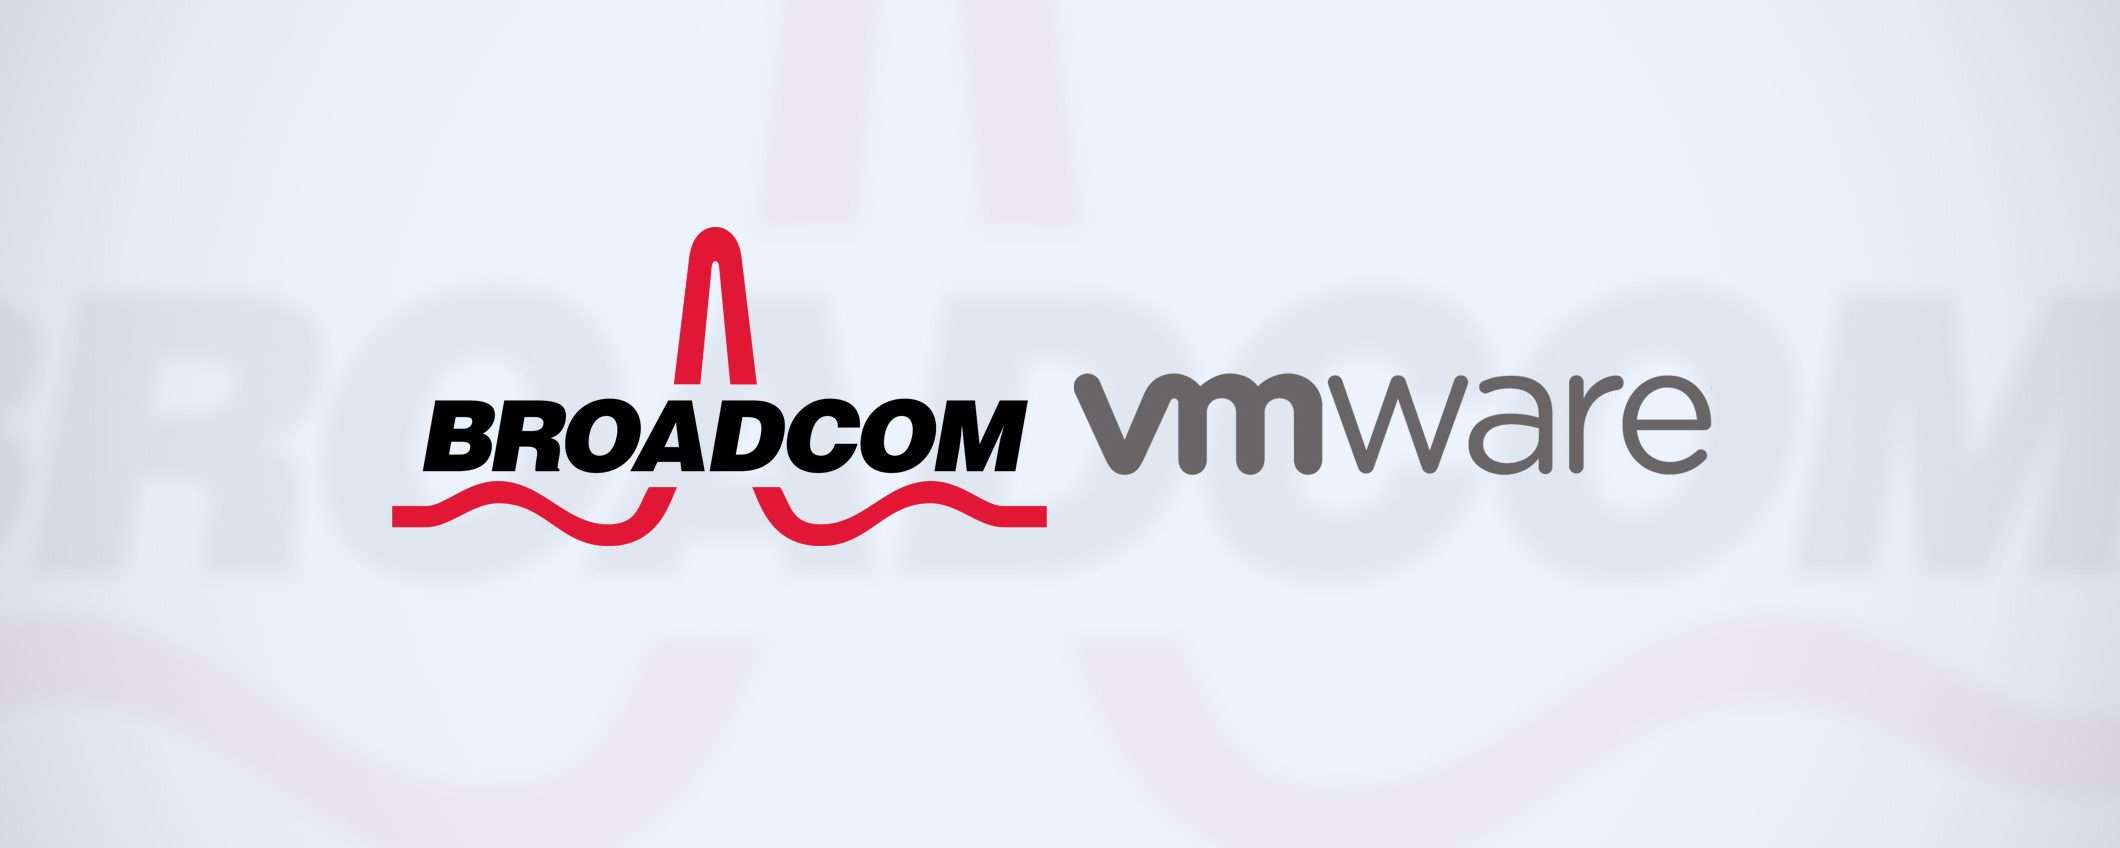 Broadcom-VMware: UE apre indagine sull'acquisizione (update)